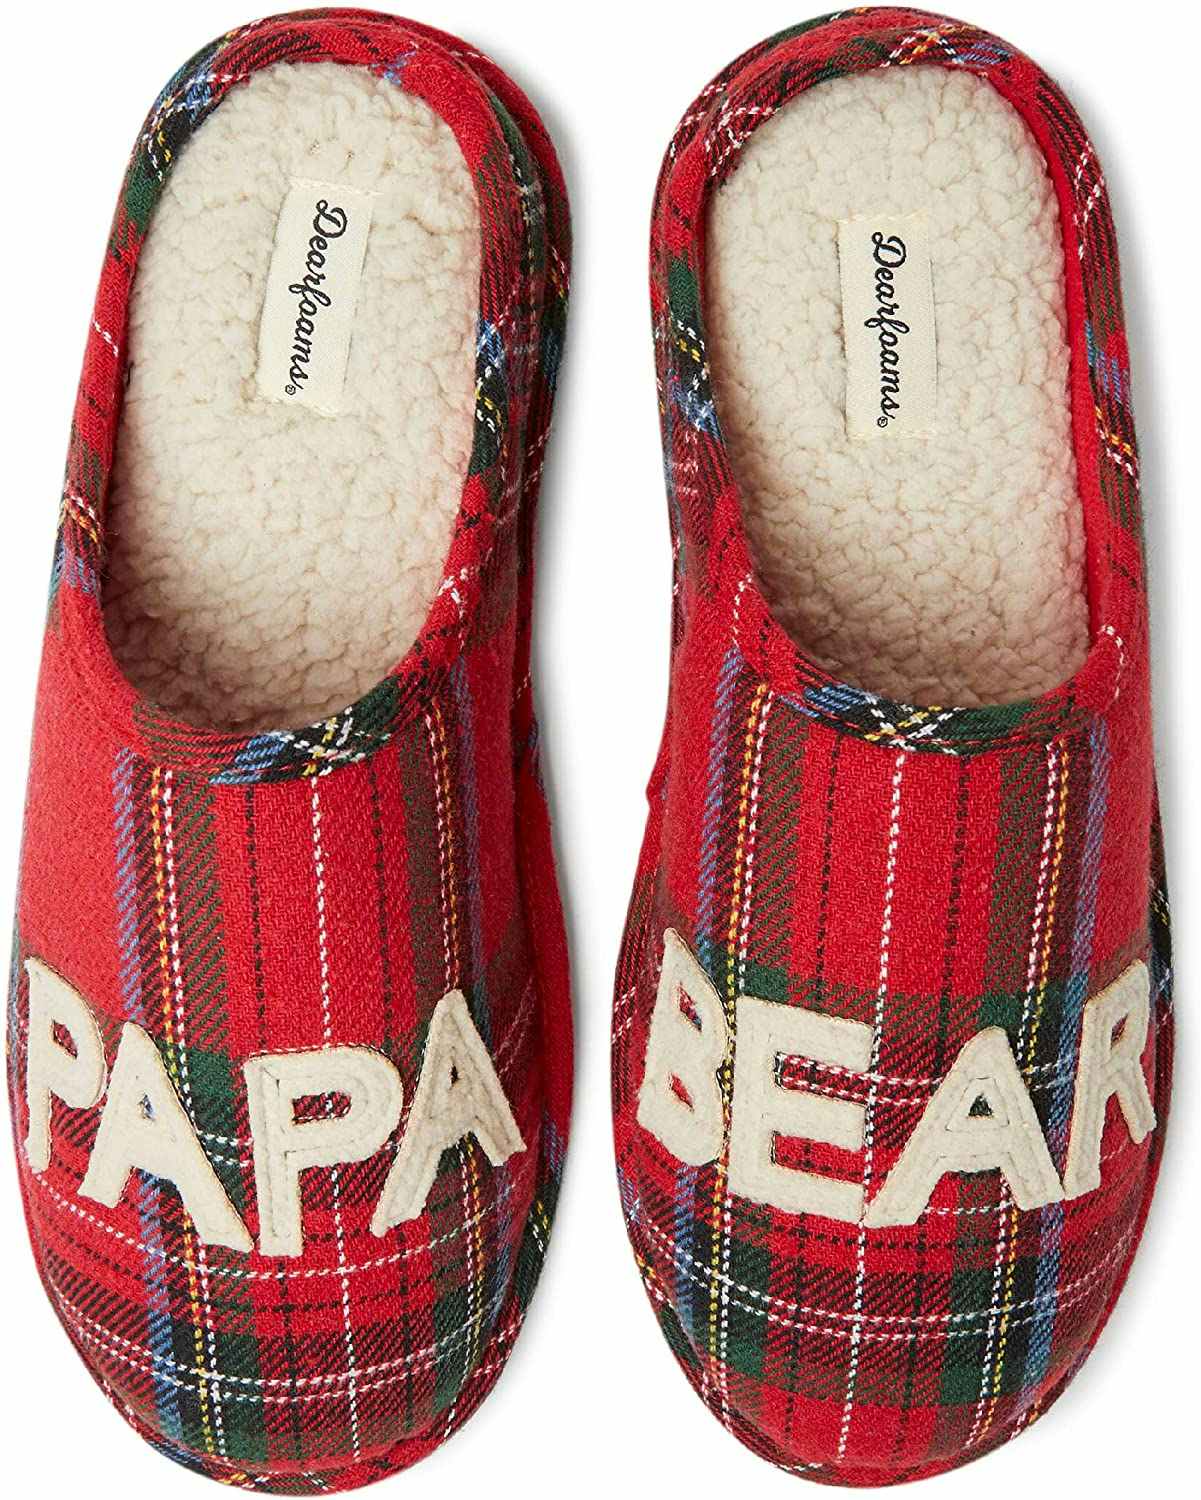 A pair of Dearfoams Papa Bear slippers.